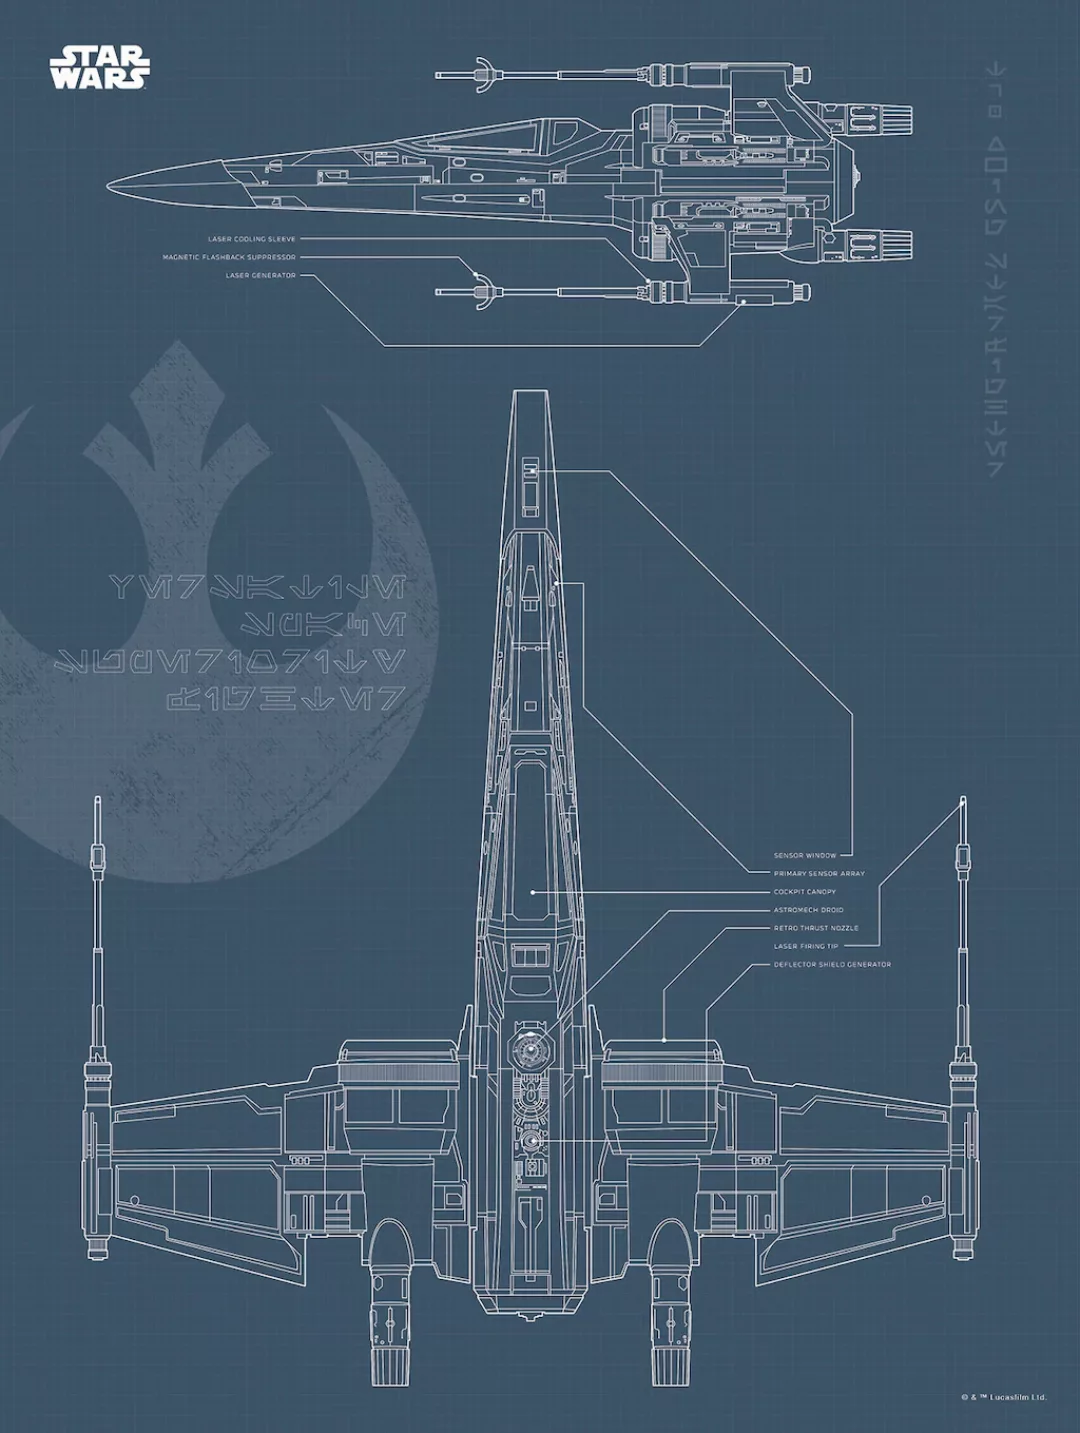 Komar Wandbild Star Wars X-Wing 30 x 40 cm günstig online kaufen